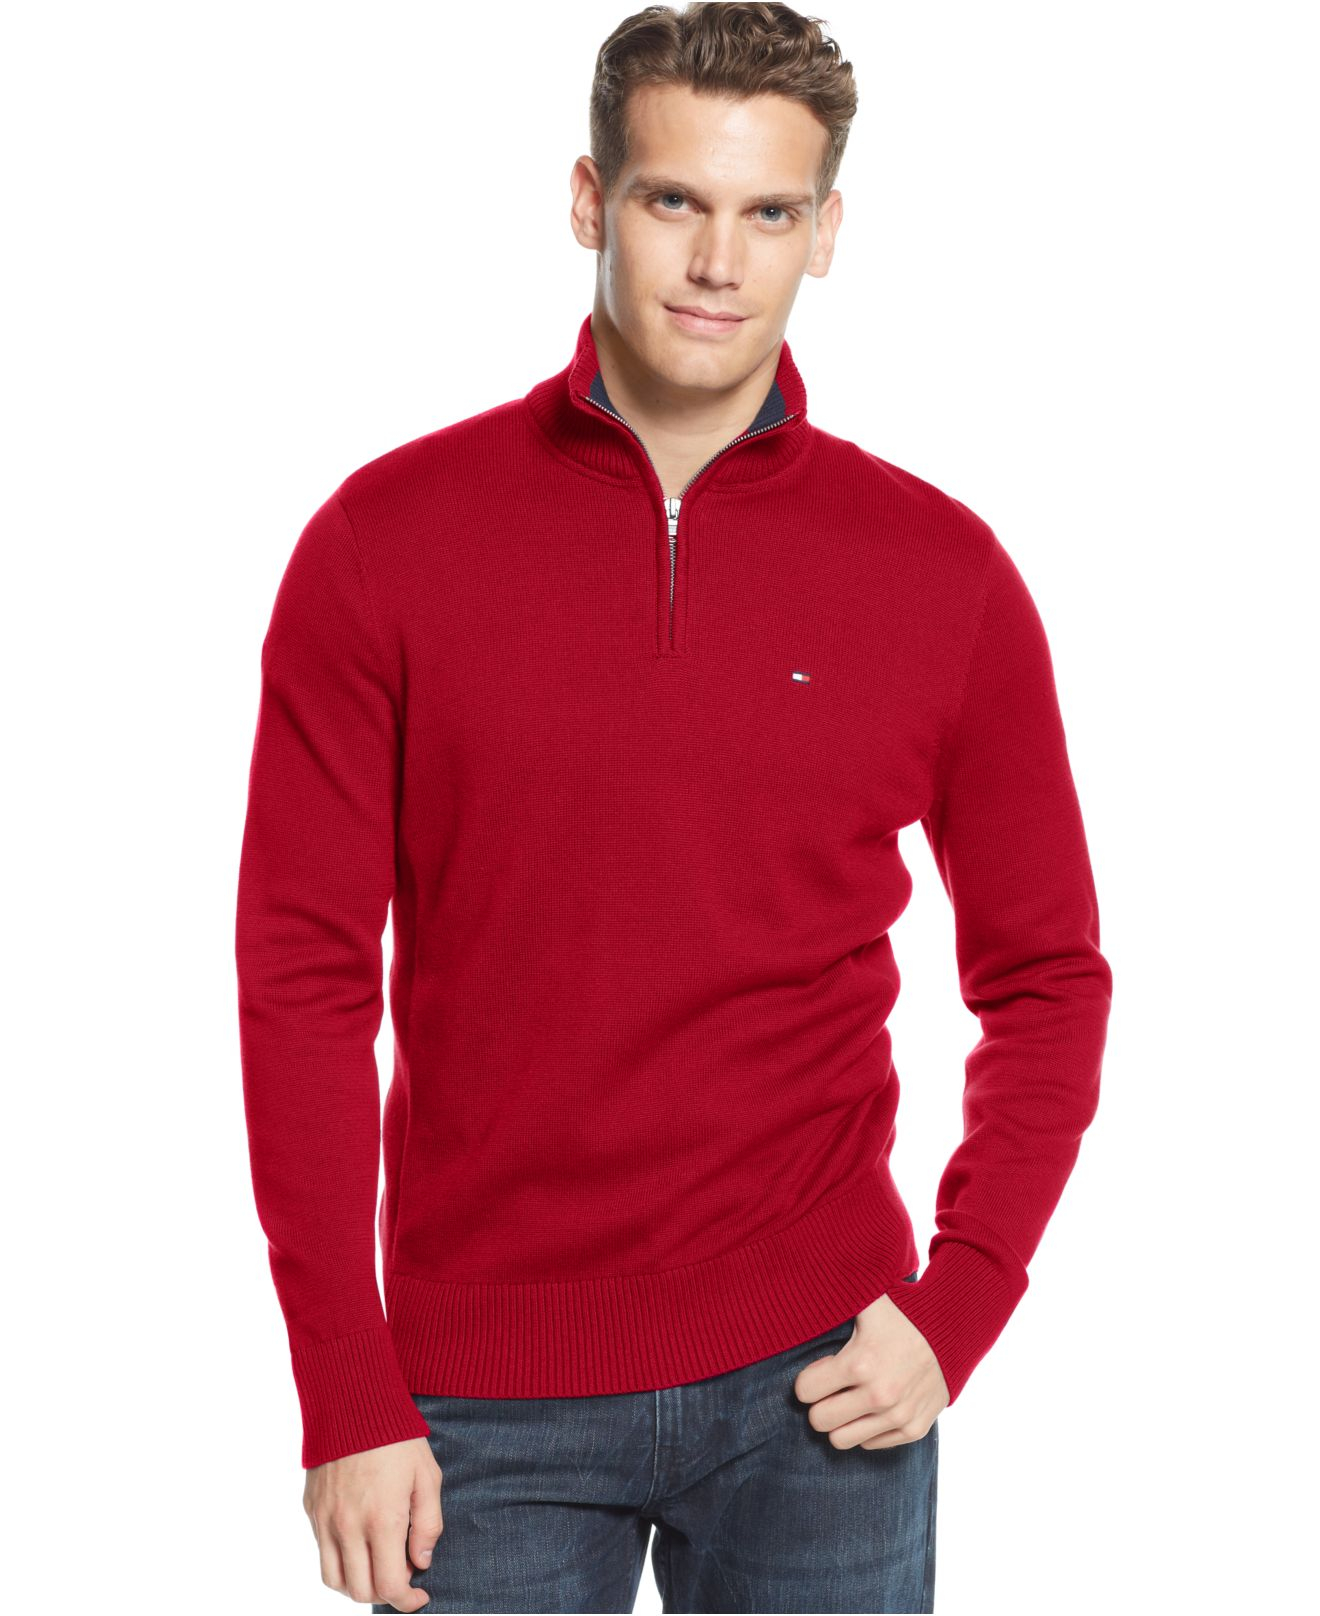 Lyst - Tommy Hilfiger Mclaughlan Half-Zip Sweater in Red for Men